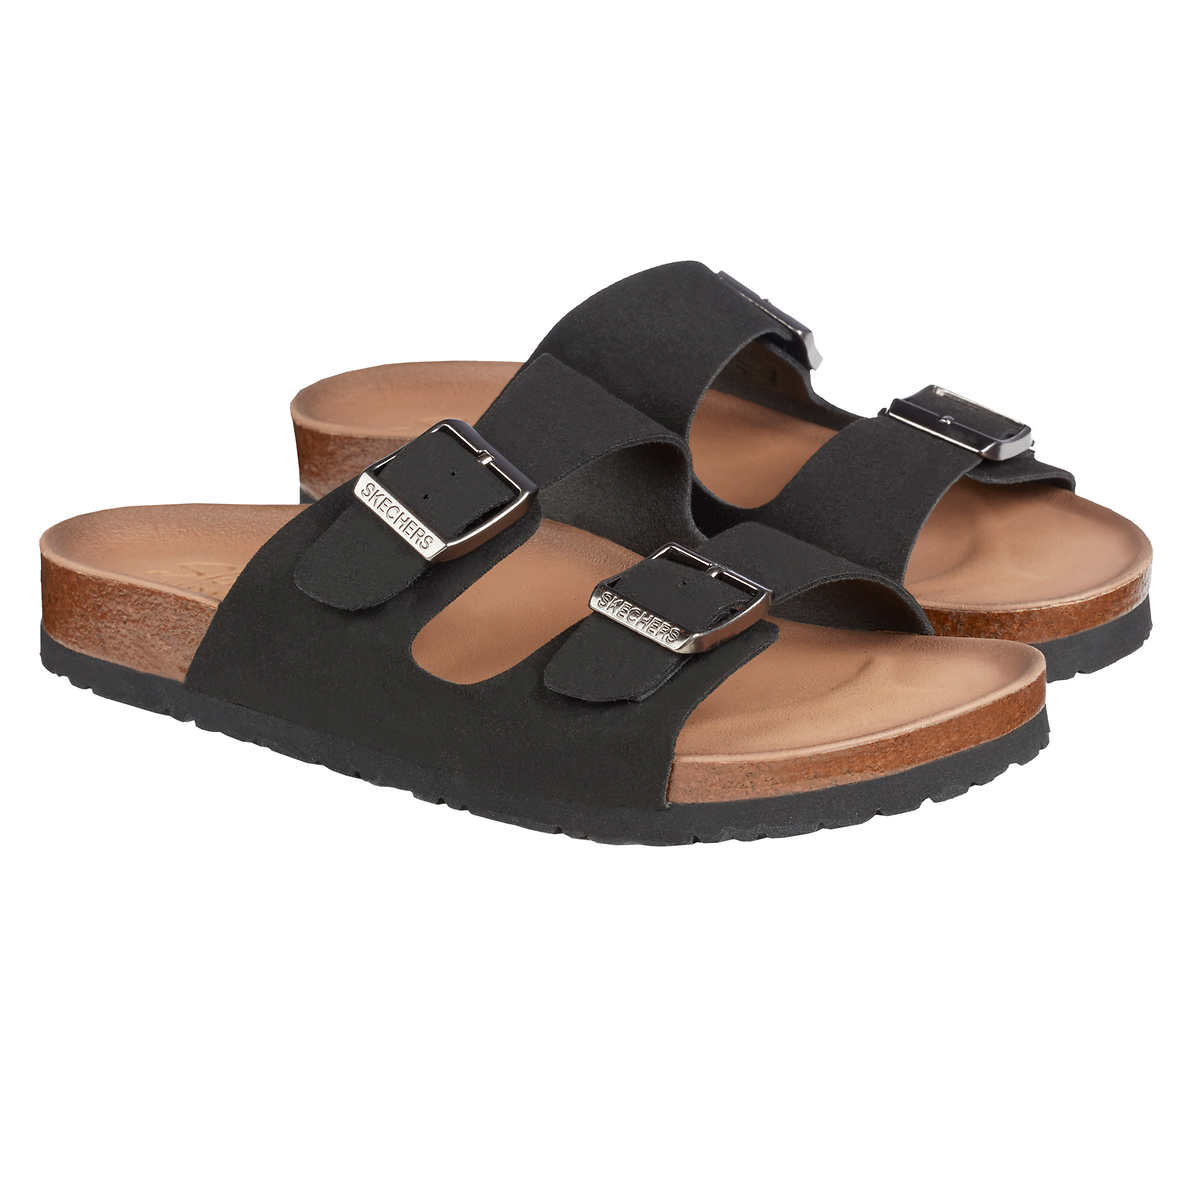 Ladies Coolers Premier Leather Slingback Summer Sandals Size 4 5 6 7 8 